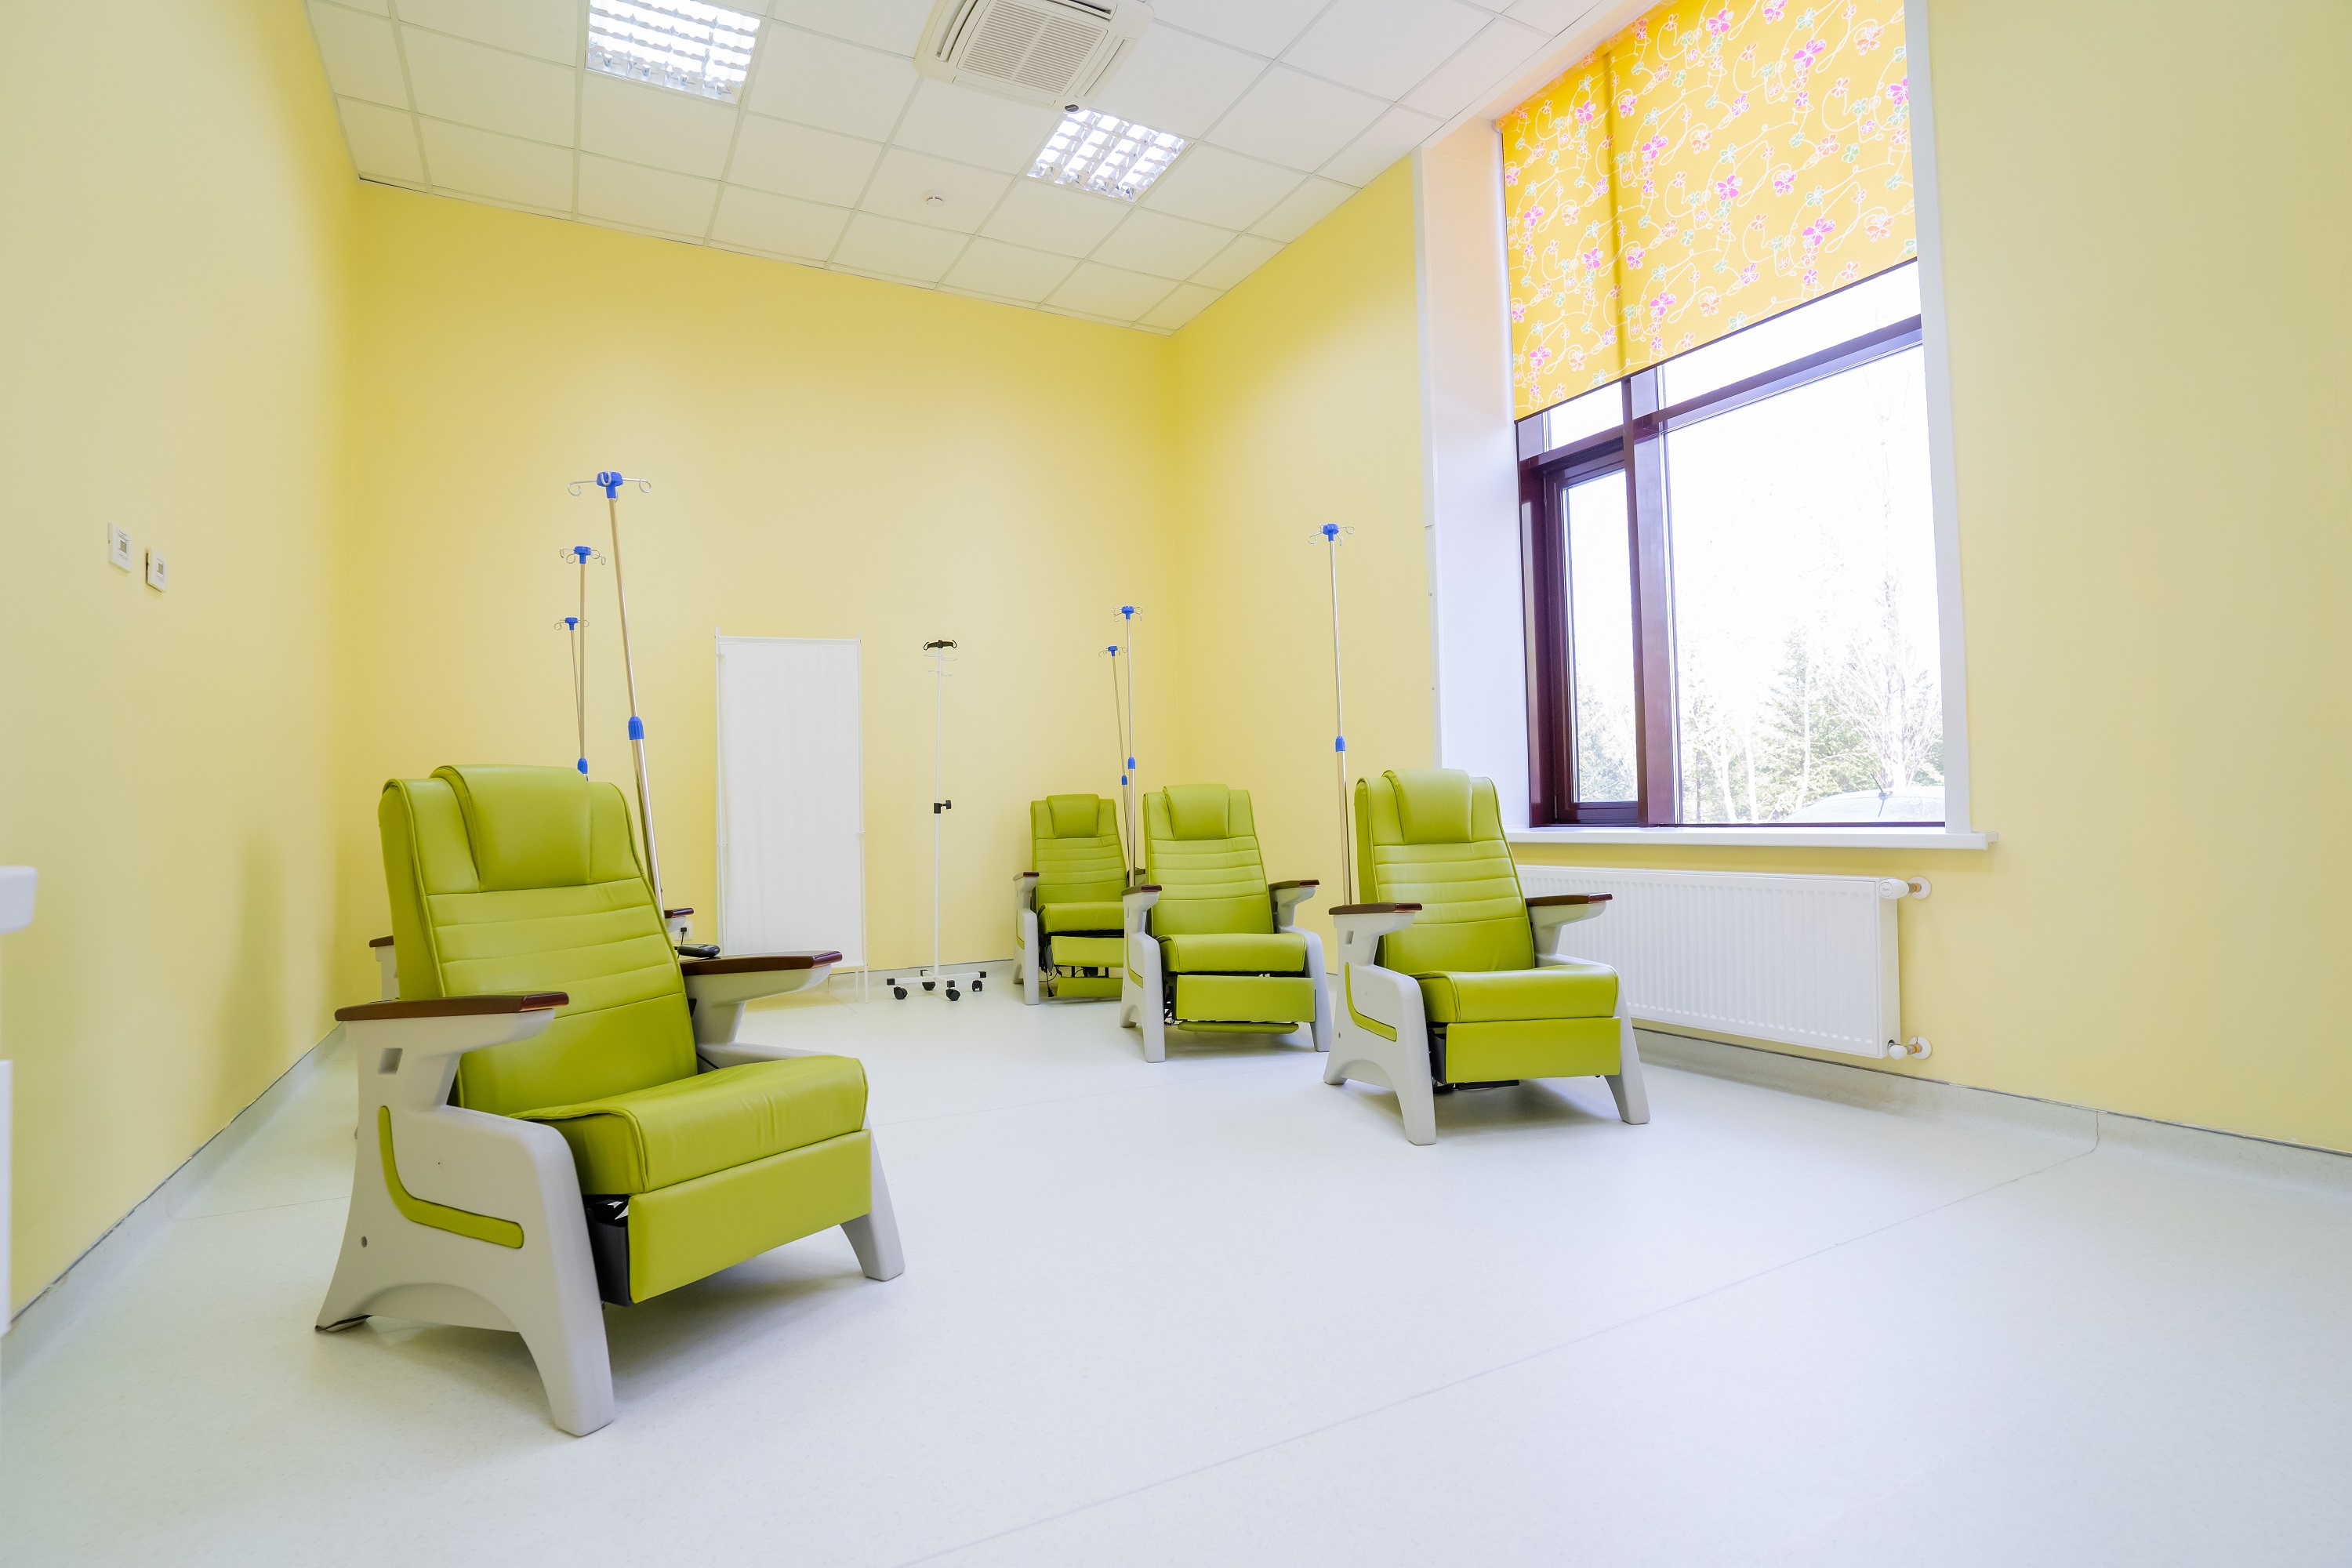 Chemotherapy room, UMIT Tomotherapy Center, Kazakhstan